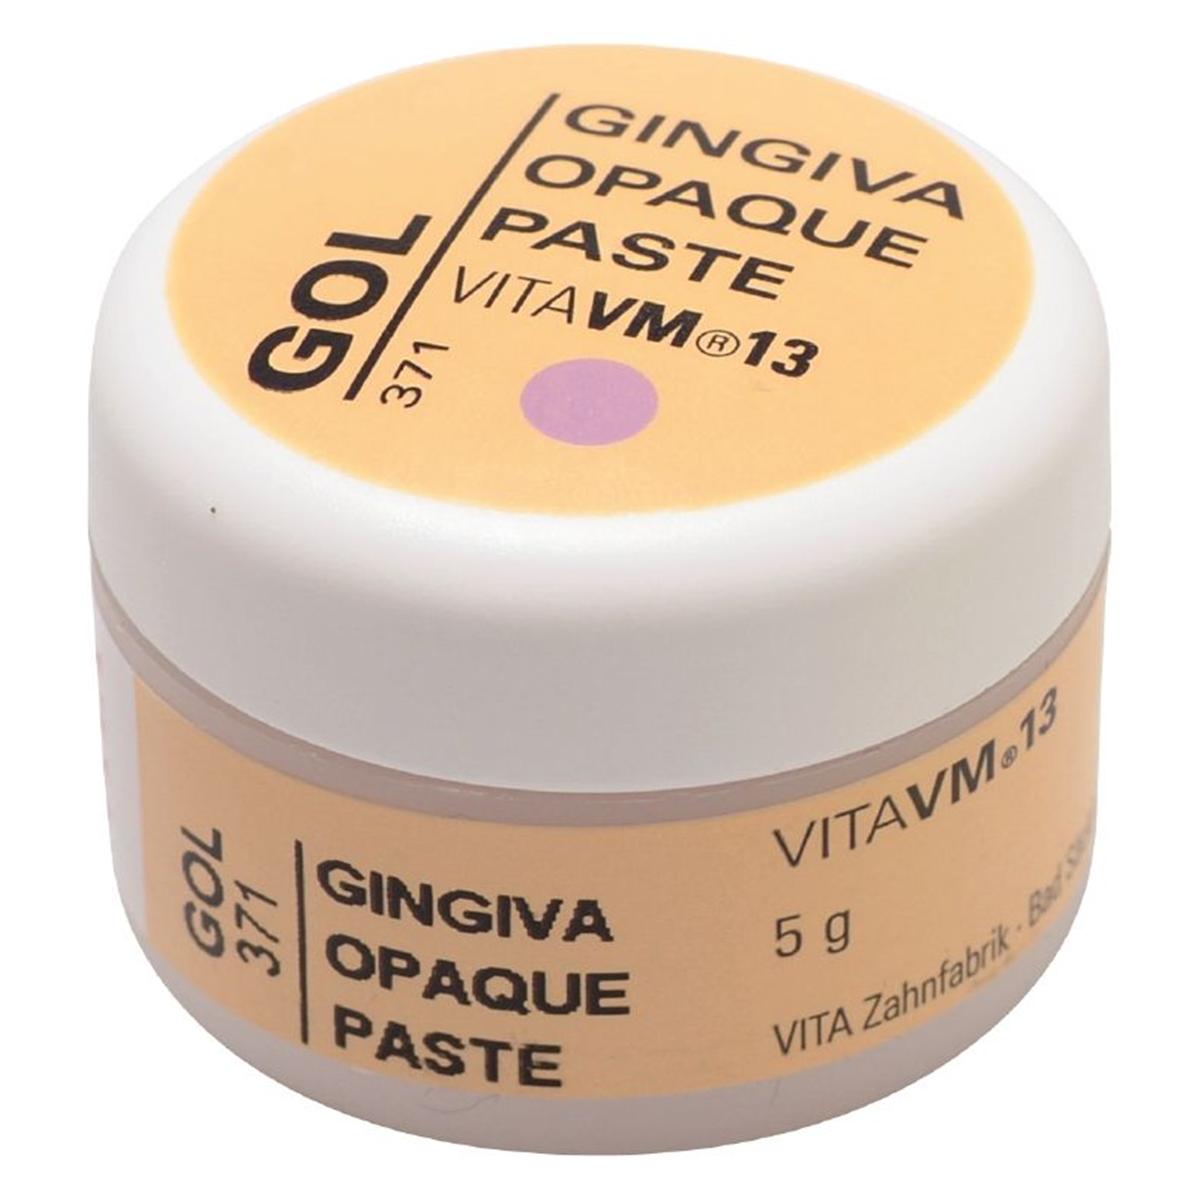 VM13 VITA - Gingiva Opaque - GOL - Le pot de 12 g